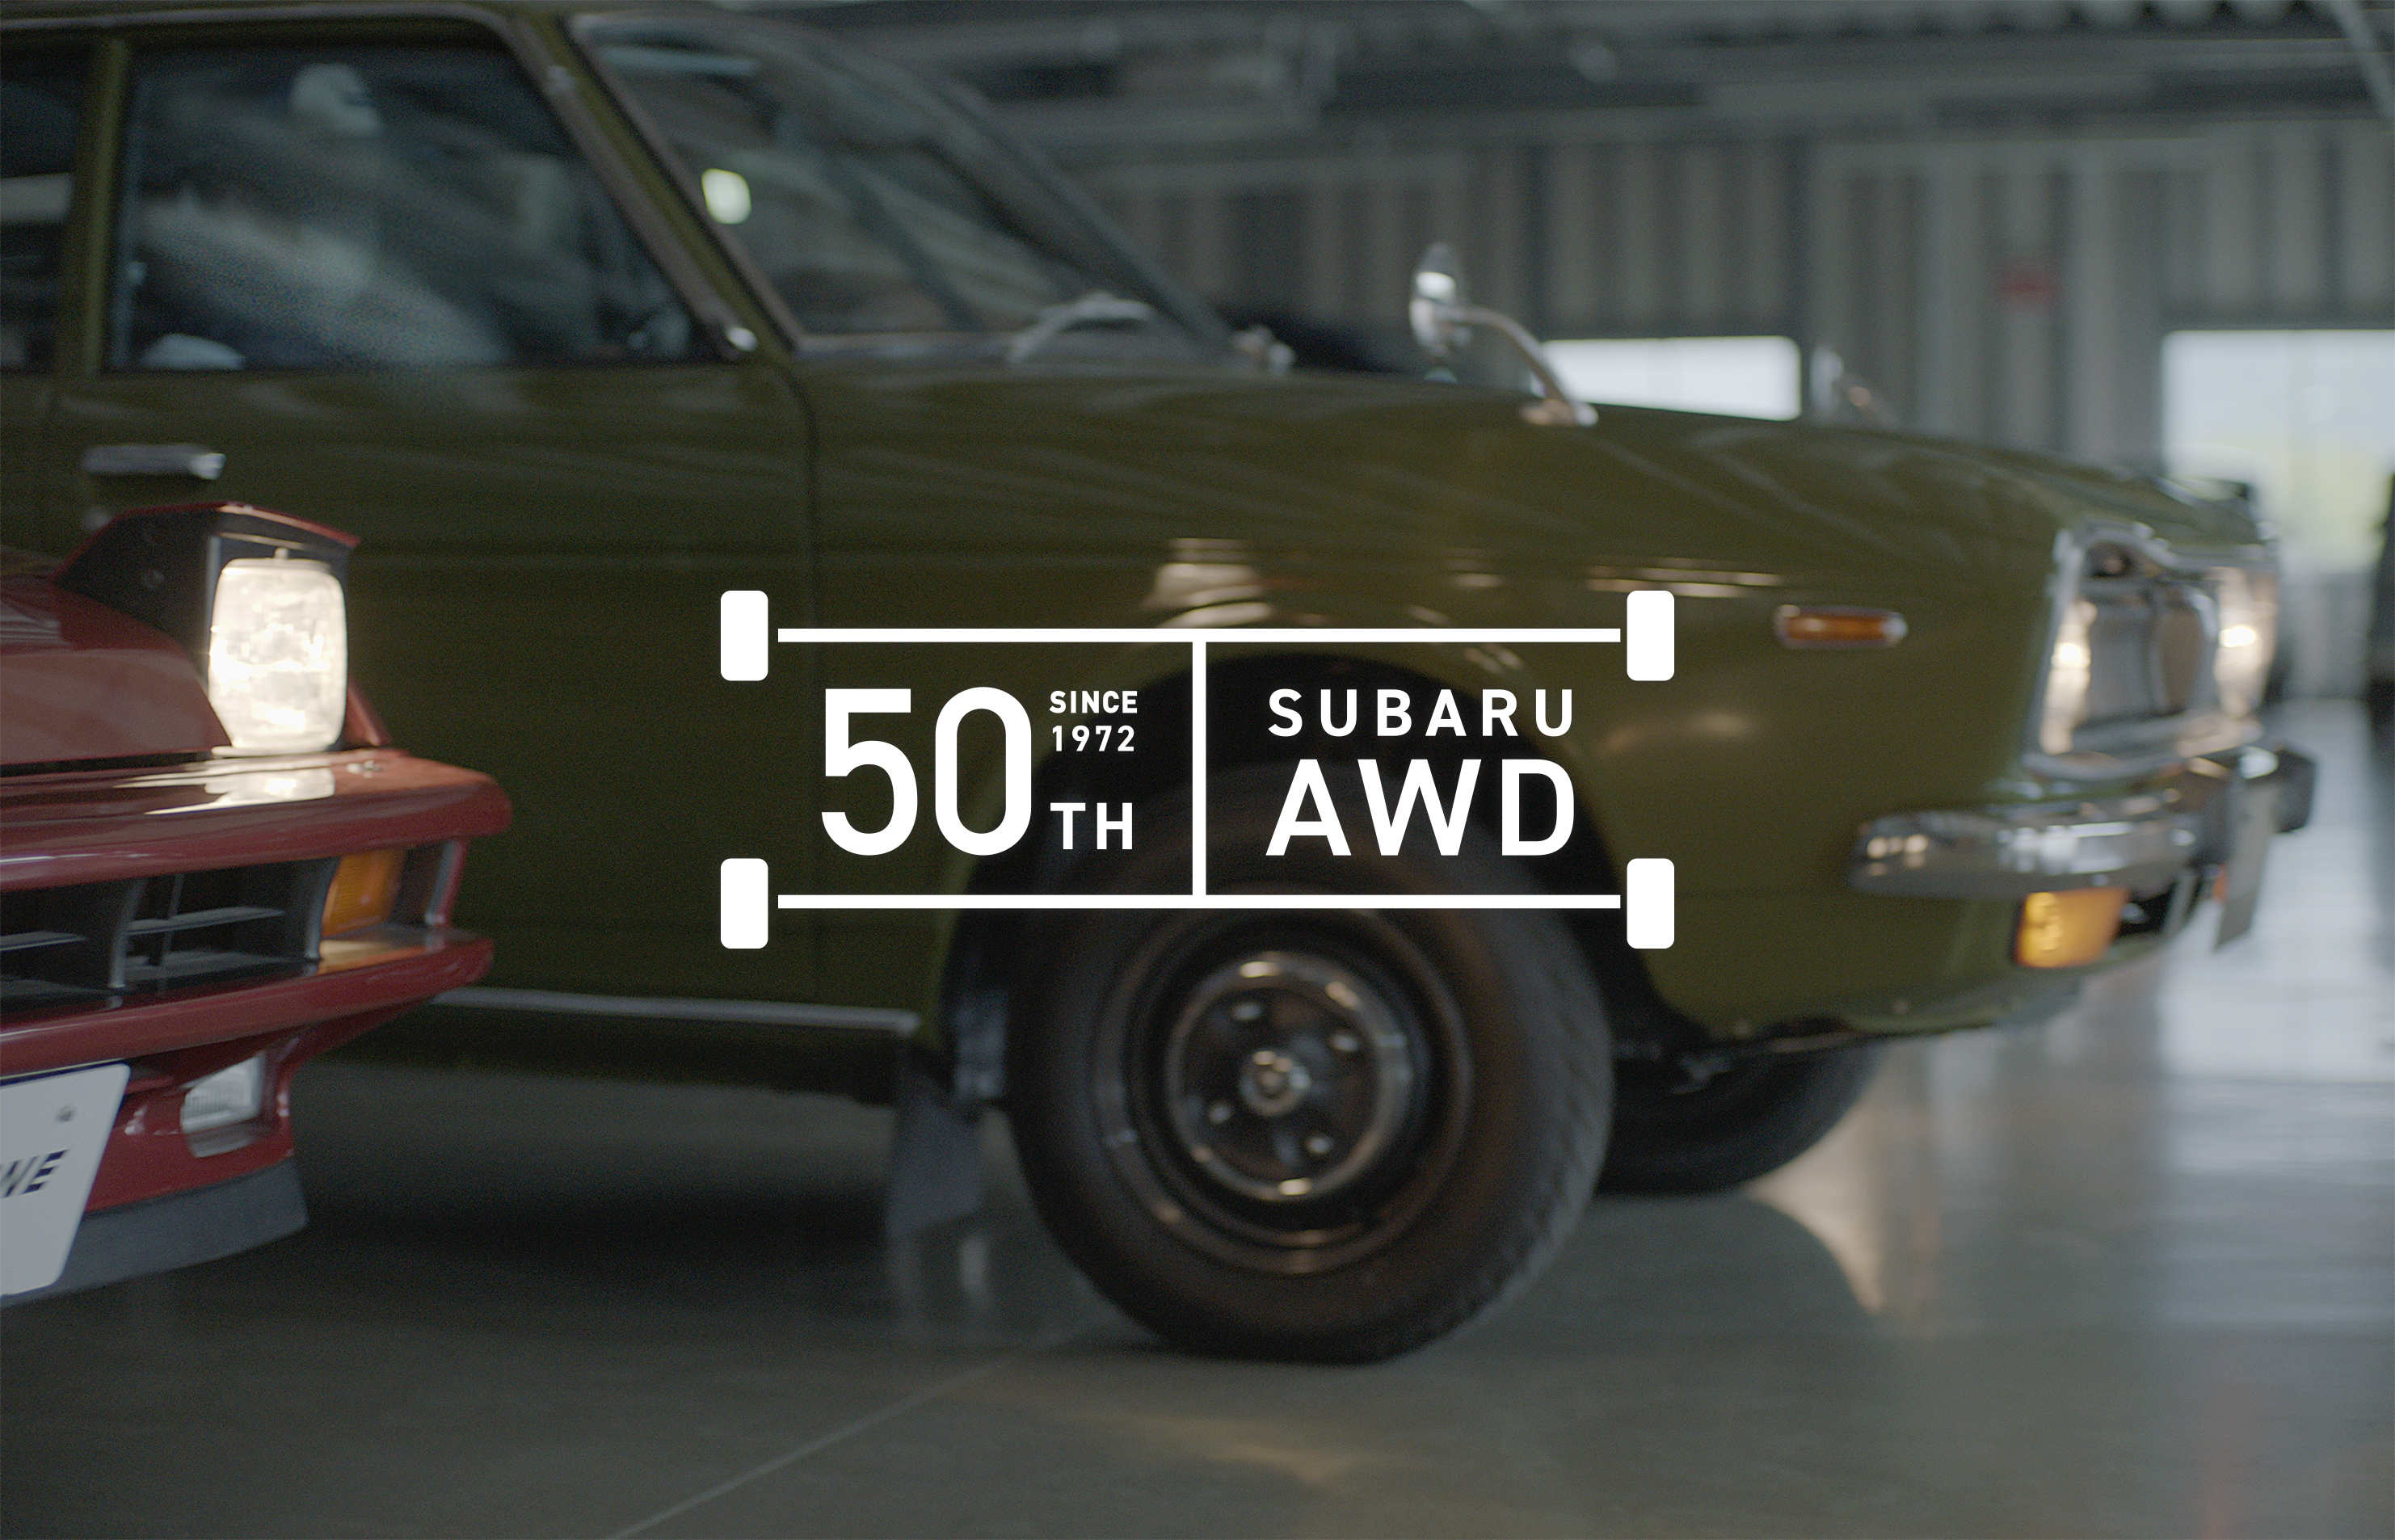 Subaru vehicle with 50th Anniversary logo